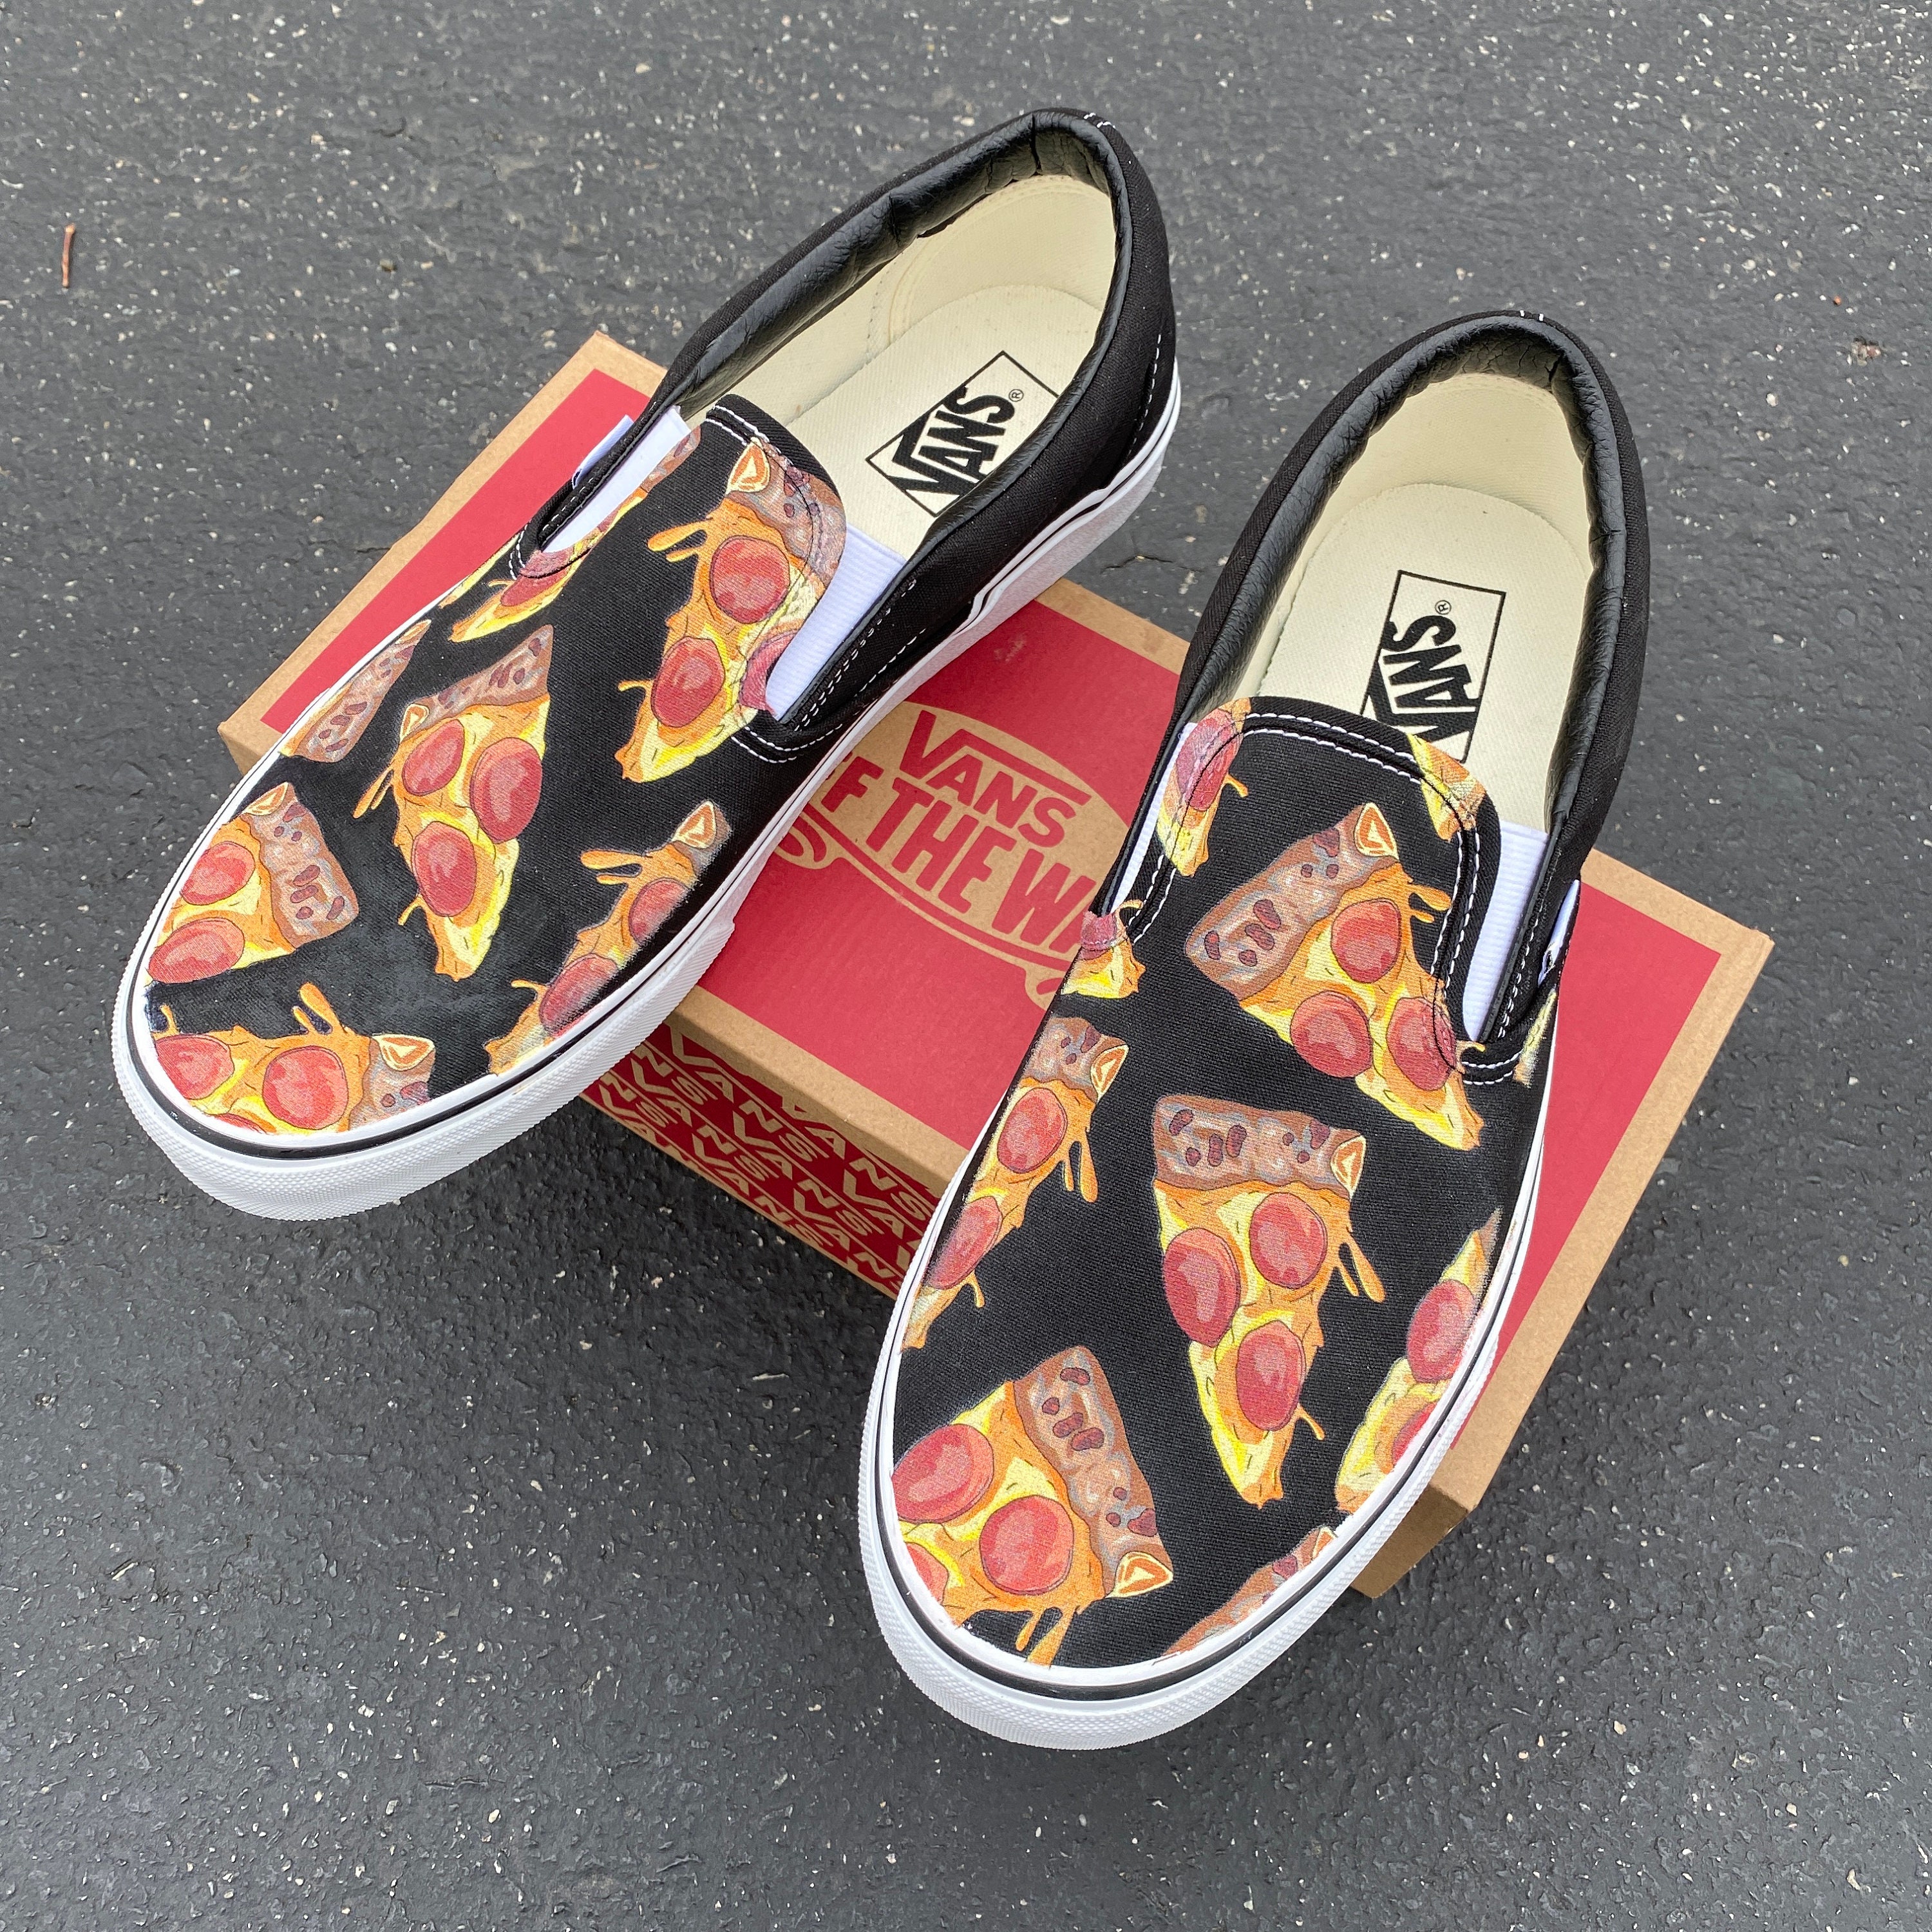 Juster Overhale mavepine Pizza Vans Slip on Shoes | Etsy